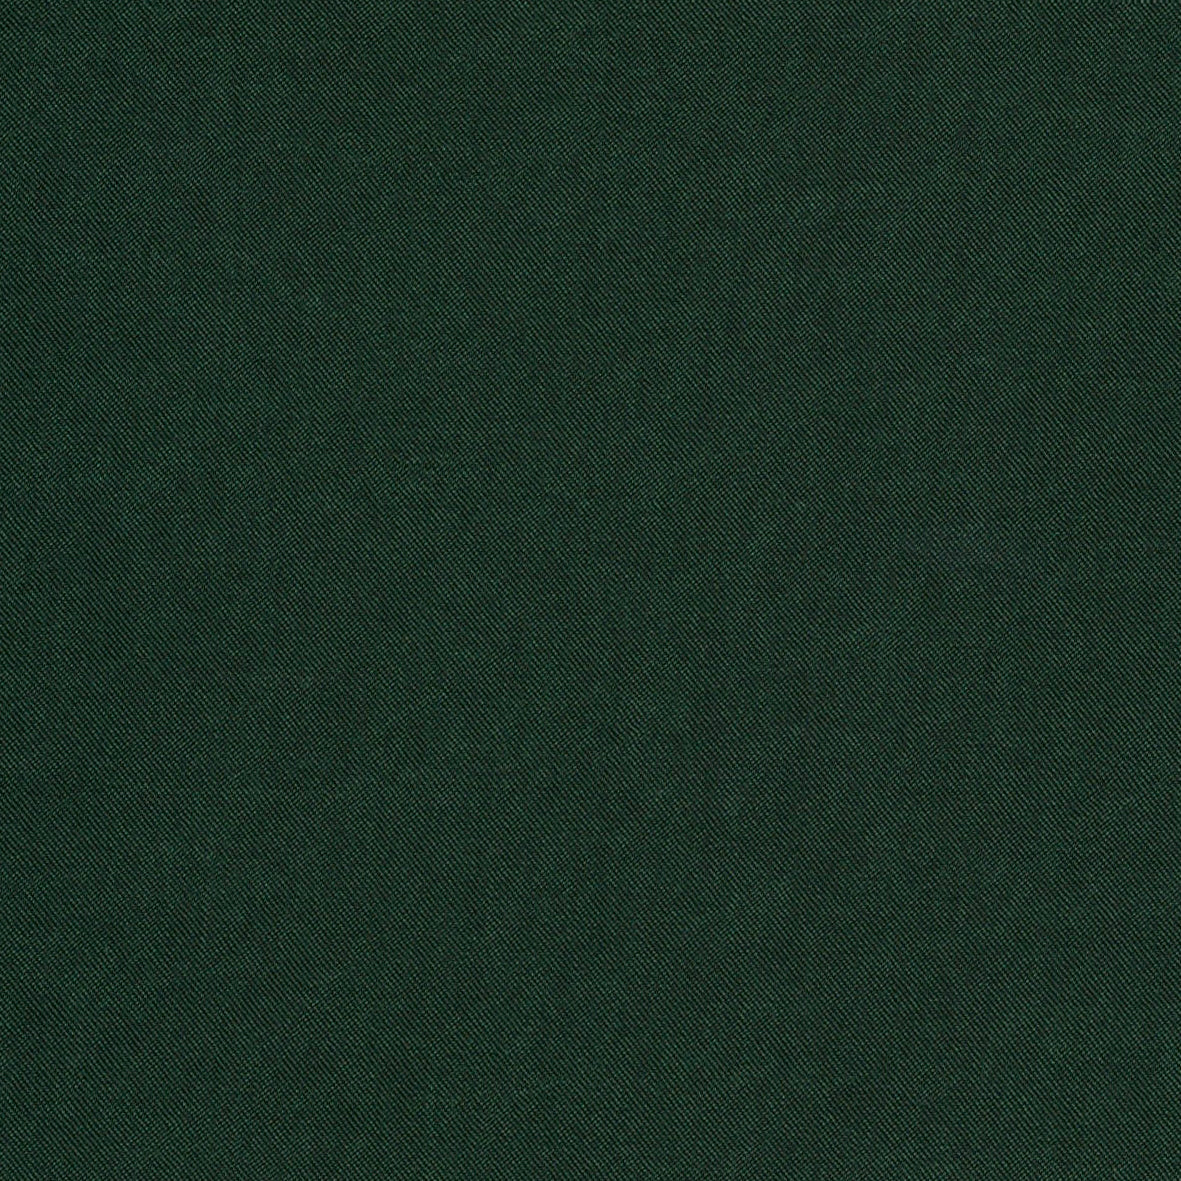 37002-04 Green Polyester Satin Washed Plain Dyed 100% green plain dyed polyester satin washed woven Satin - knit fabric - woven fabric - fabric company - fabric wholesale - fabric b2b - fabric factory - high quality fabric - hong kong fabric - fabric hk - acetate fabric - cotton fabric - linen fabric - metallic fabric - nylon fabric - polyester fabric - spandex fabric - chun wing hing - cwh hk - fabric worldwide ship - 針織布 - 梳織布 - 布料公司- 布料批發 - 香港布料 - 秦榮興